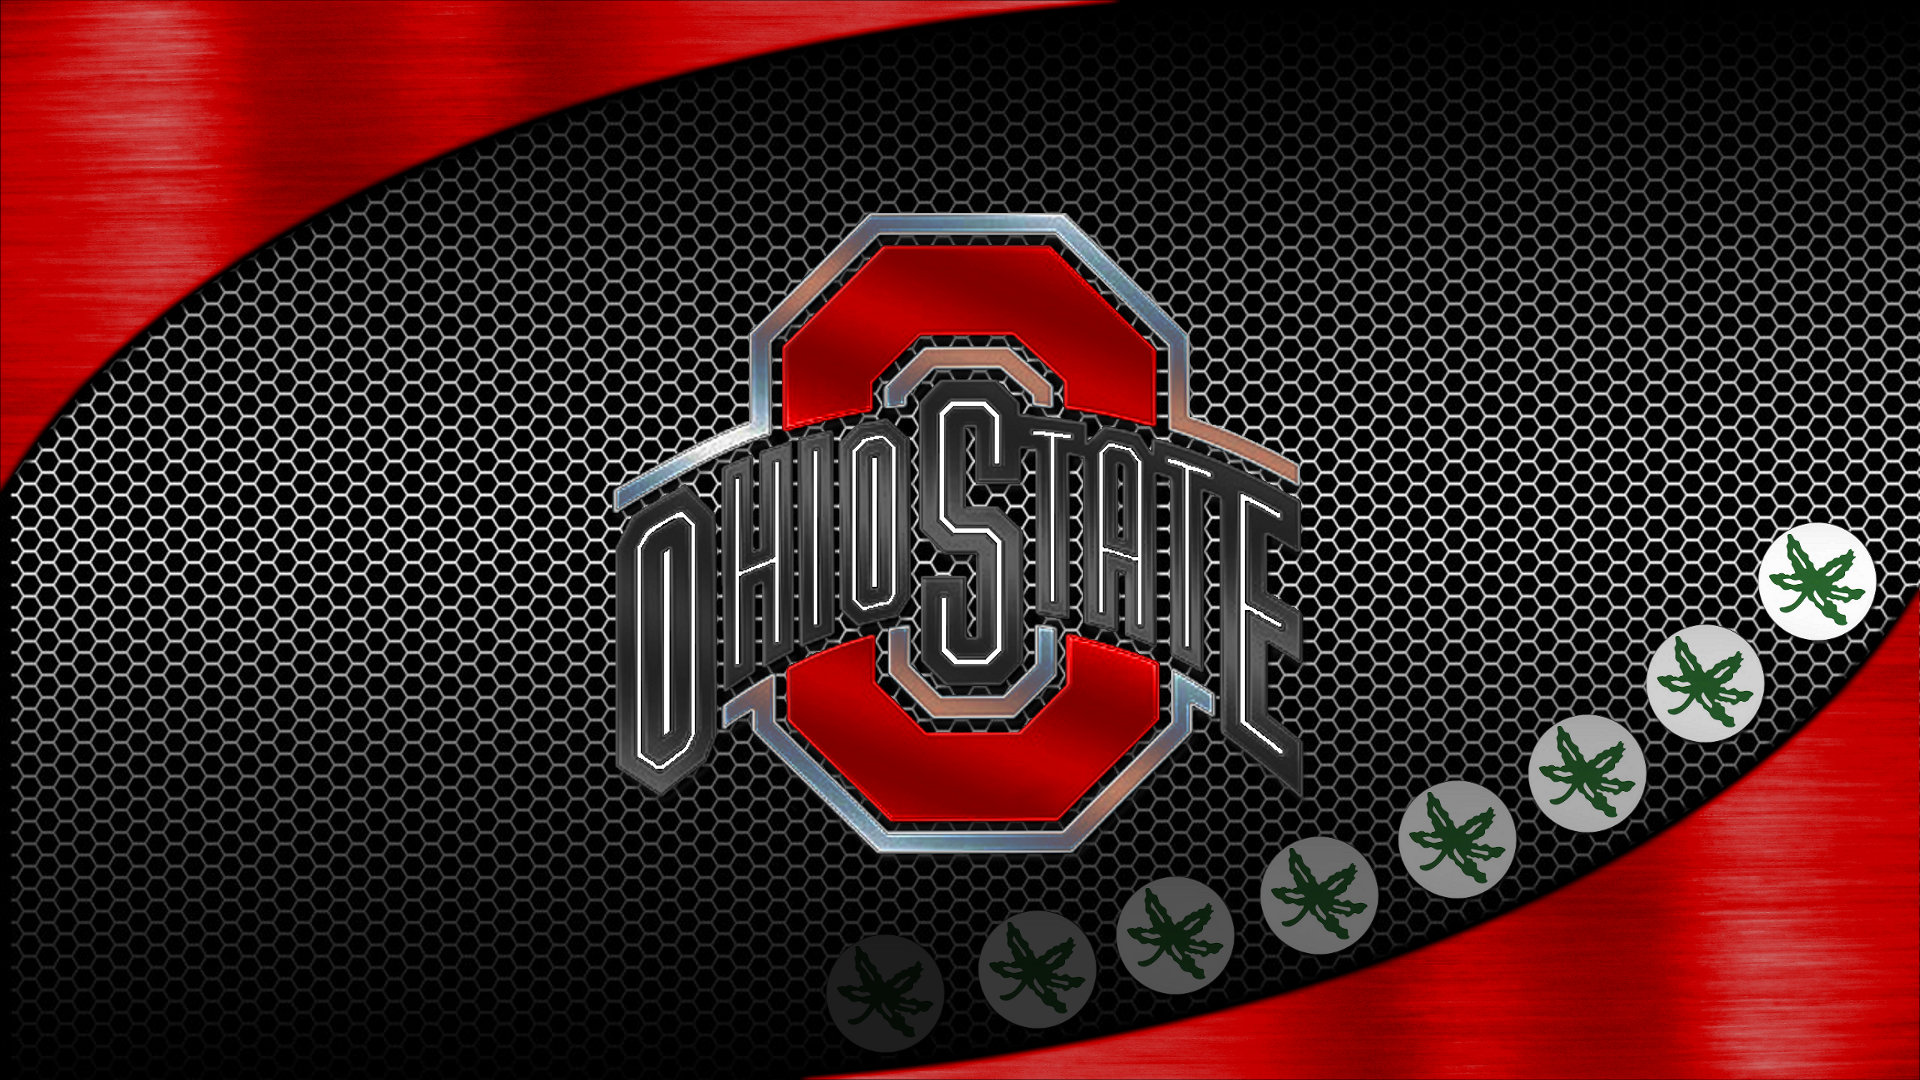 OSU Wallpaper 532 Ohio State Buckeyes Pinterest